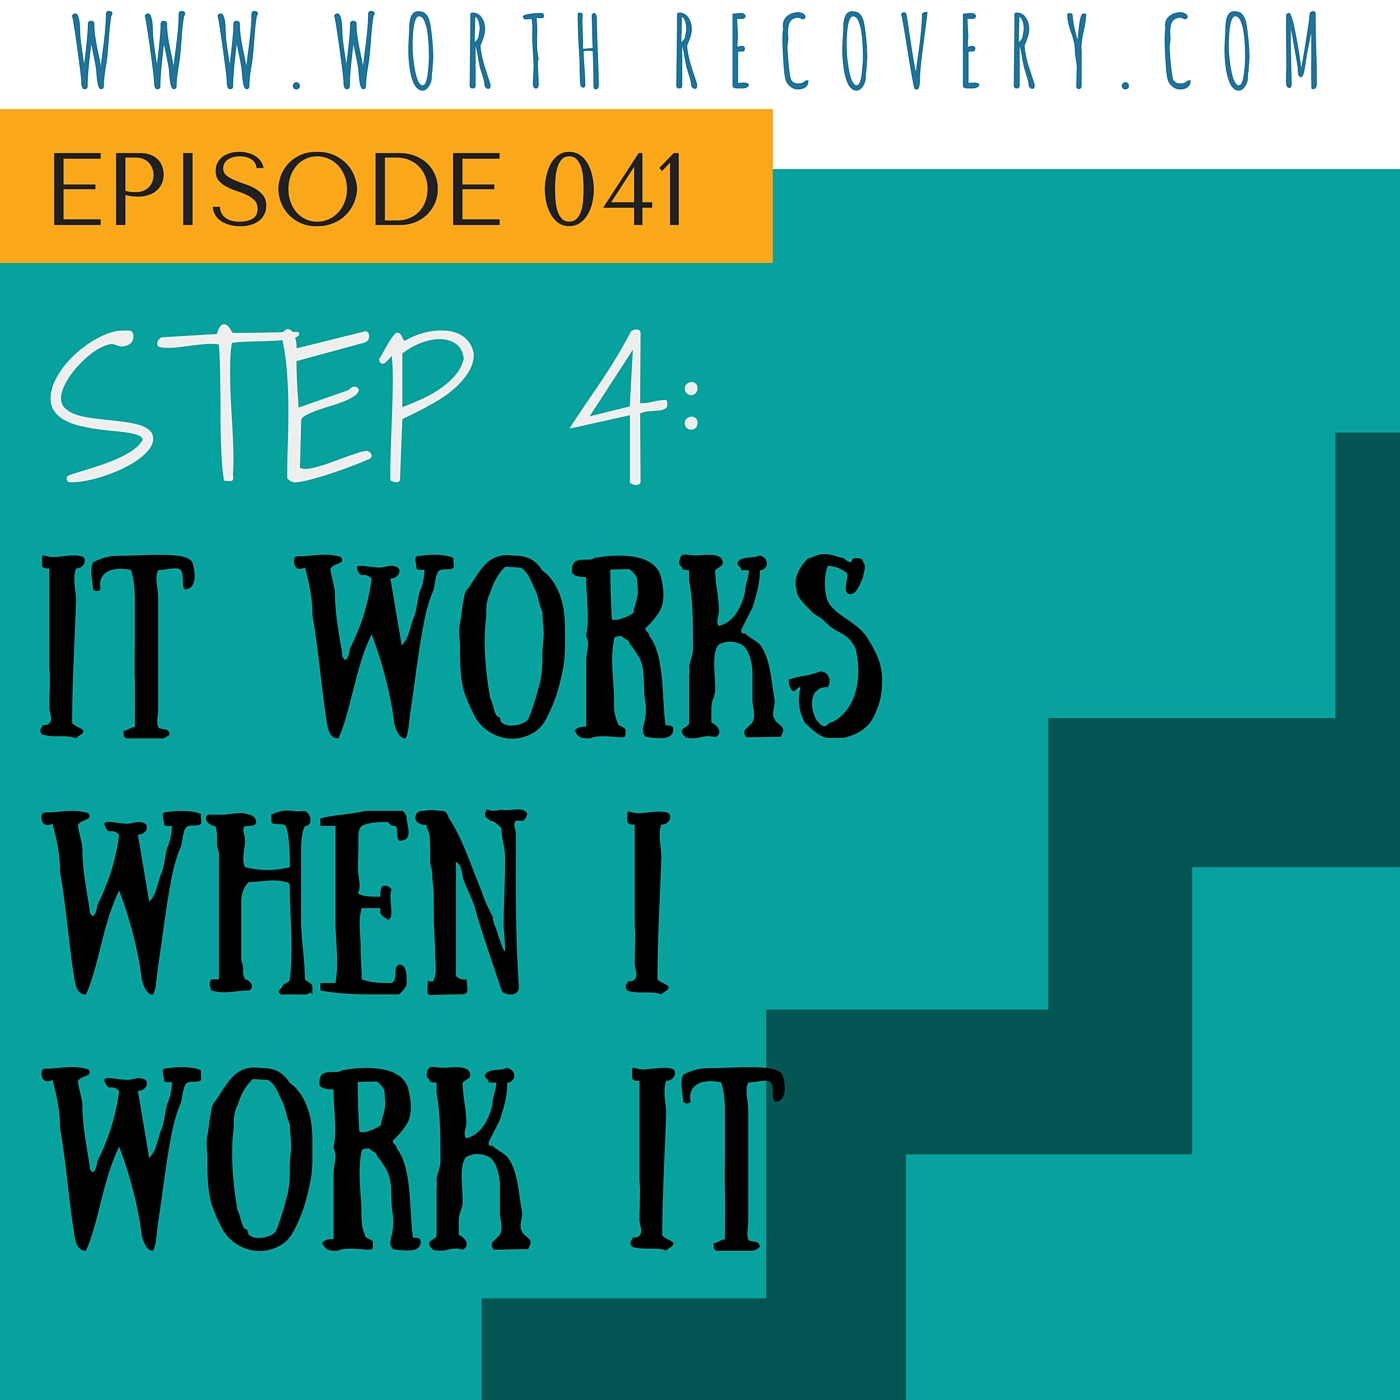 Episode 041: Step 4 - It Works When I Work It - Part 2